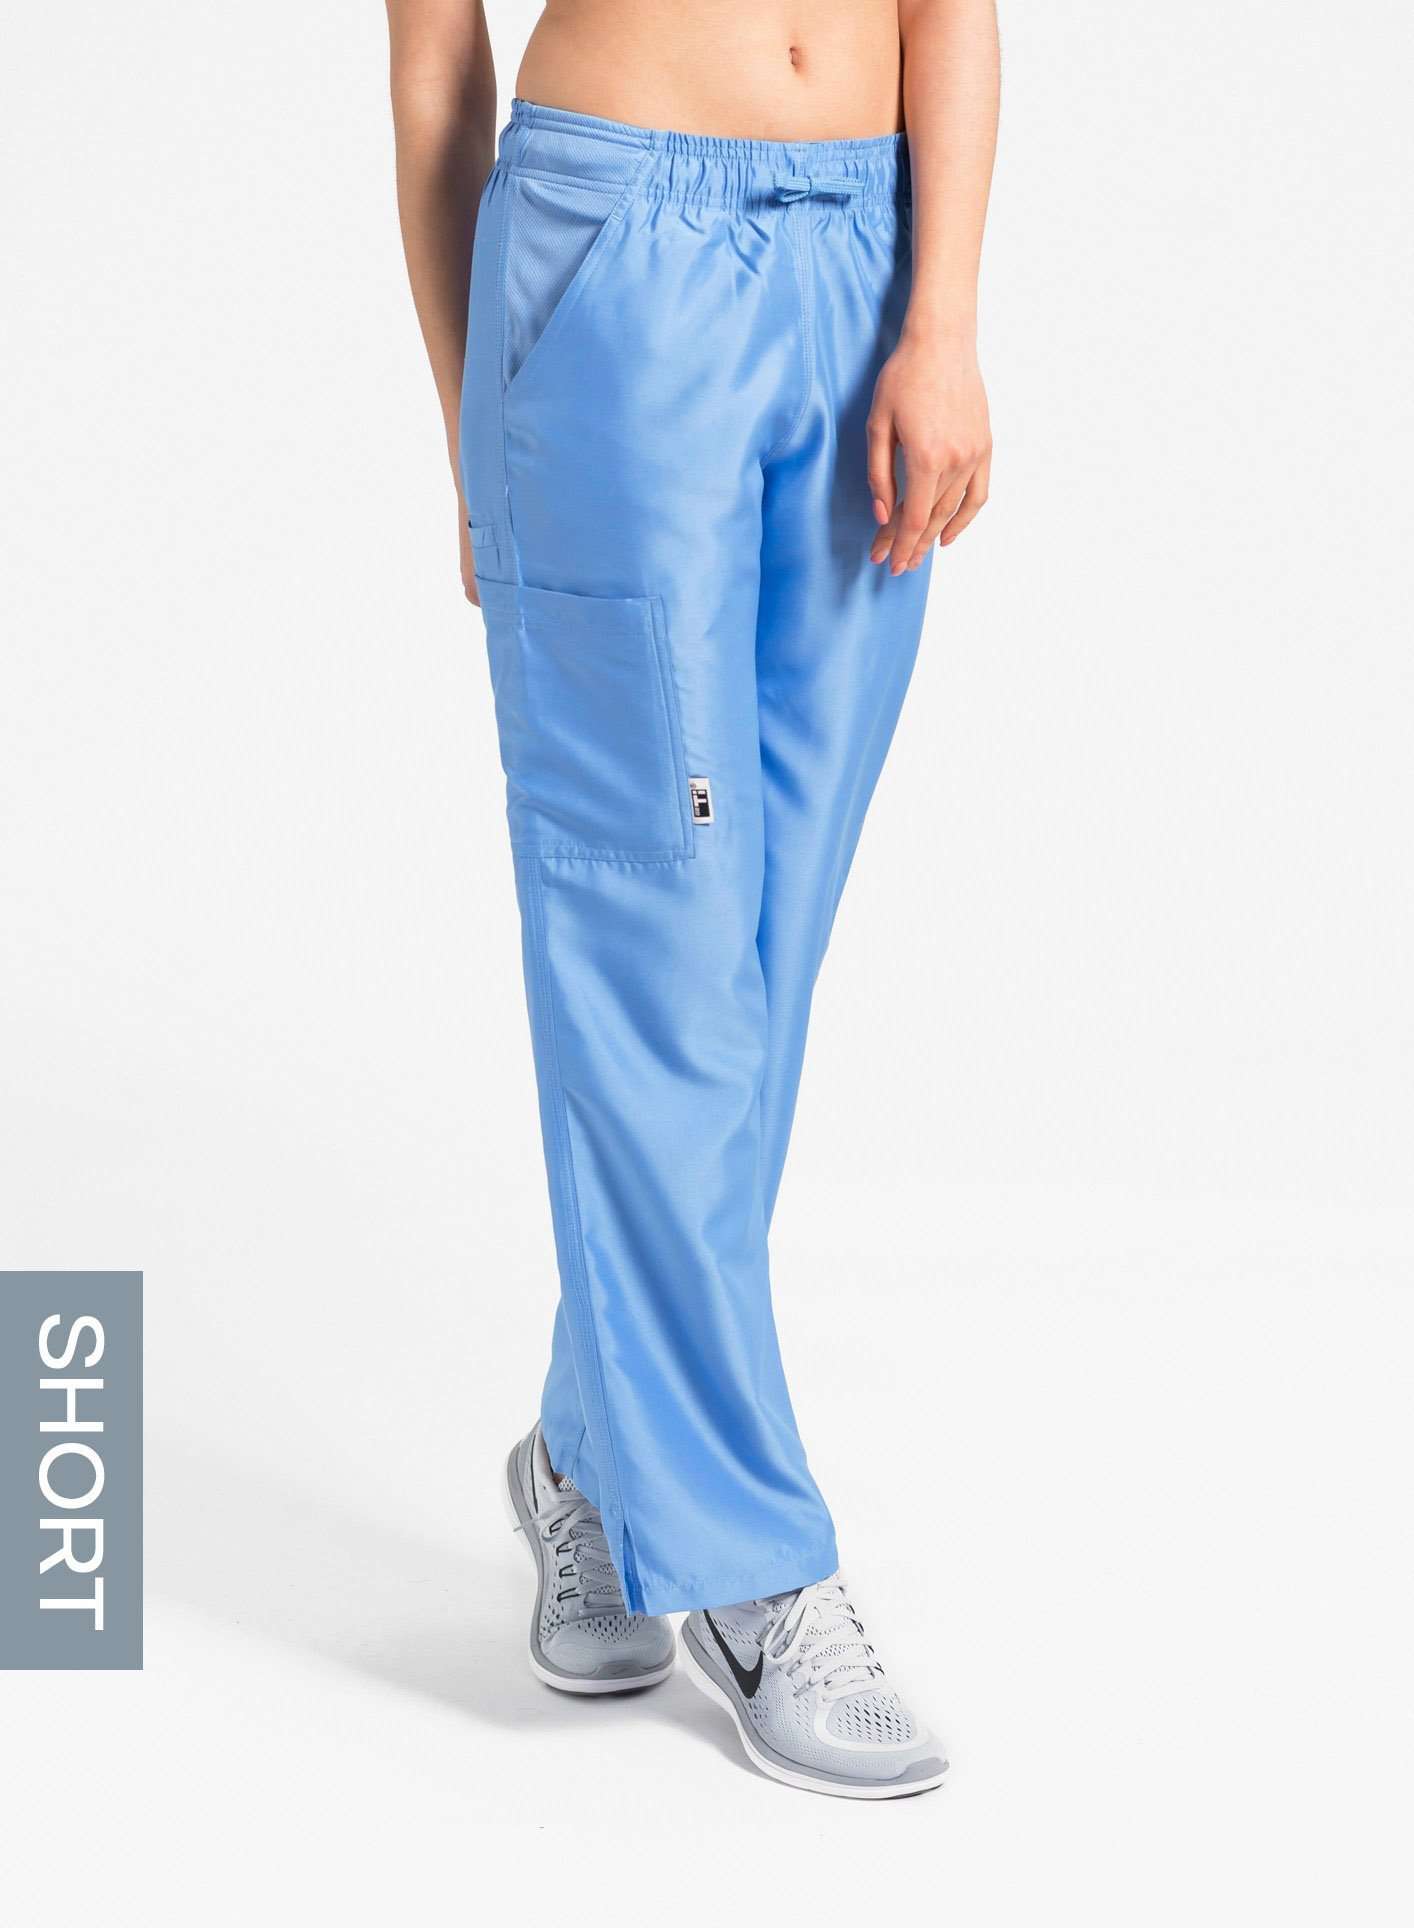 womens short cargo pocket straight leg scrub pants ceil-blue